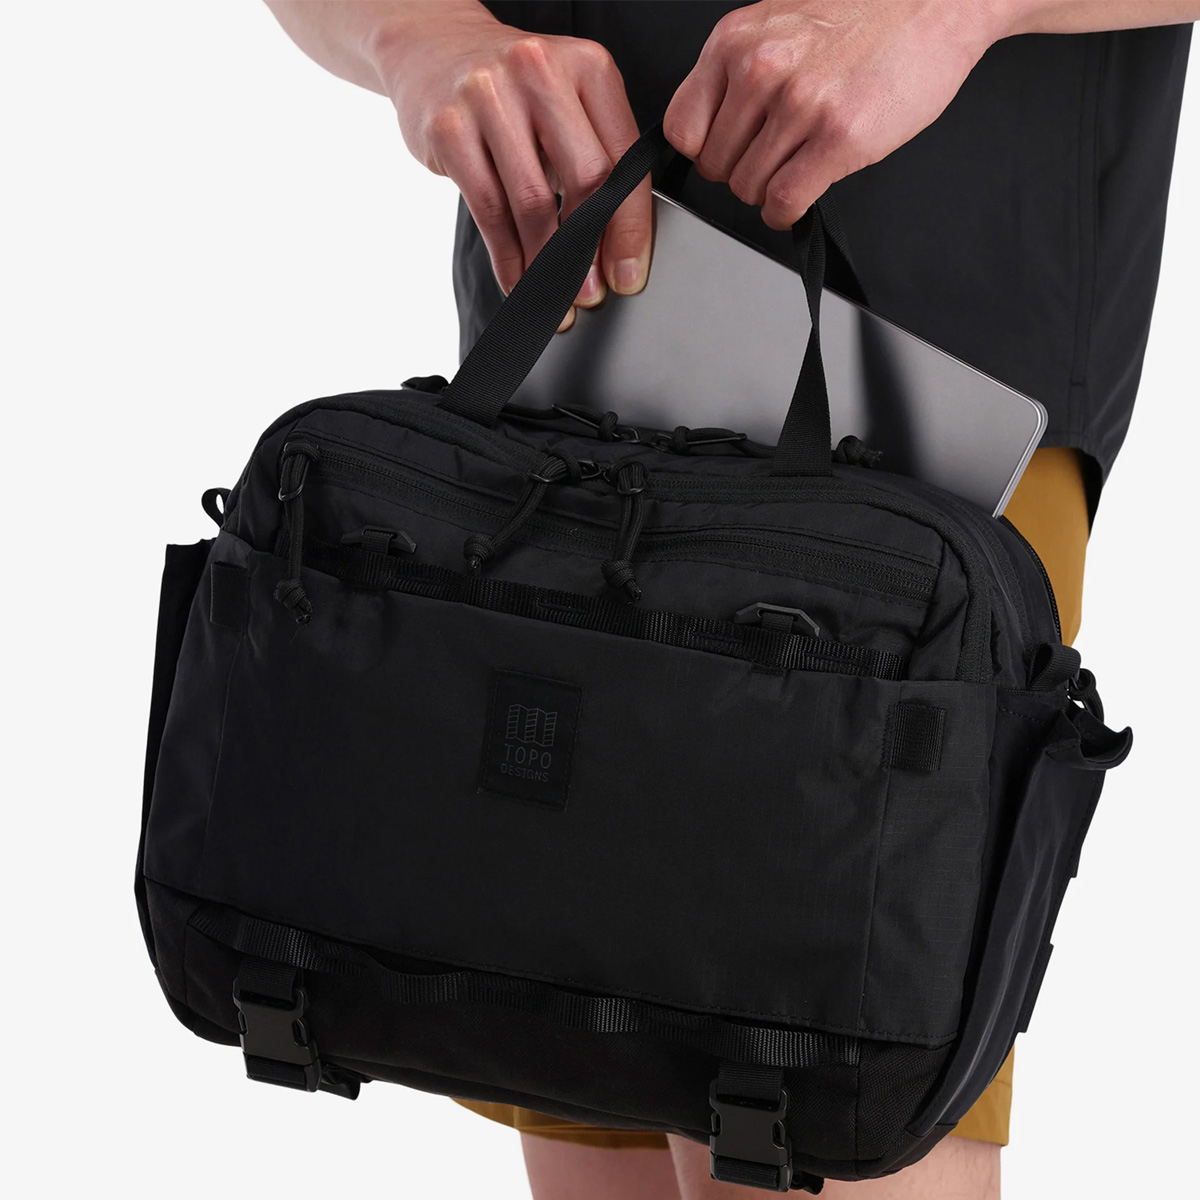 Topo Designs Mountain Cross Bag, with an internal laptop sleeve